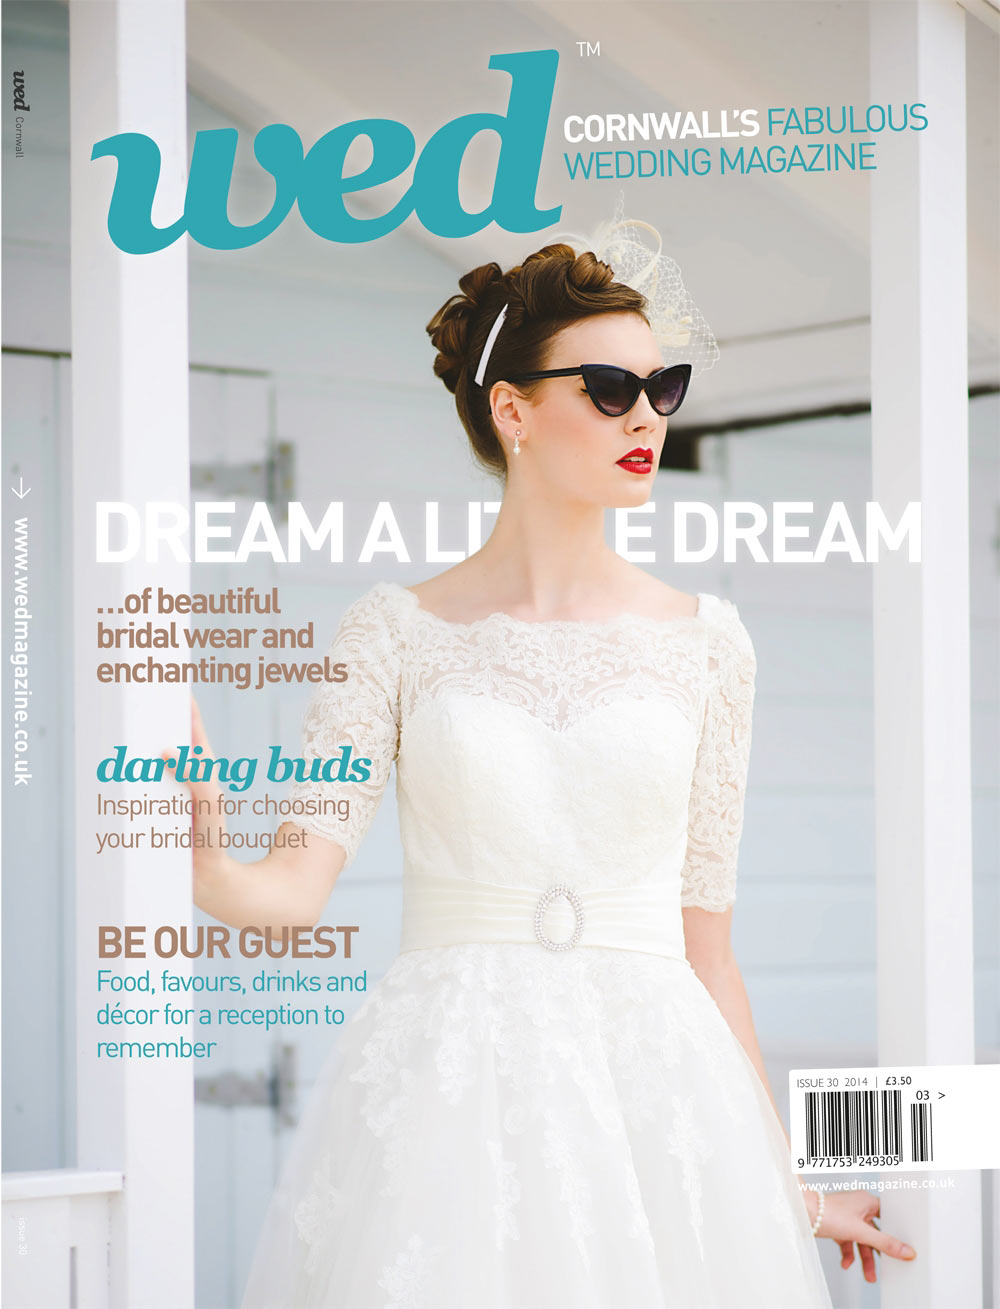 Cornwall Wed Magazine - Issue 30